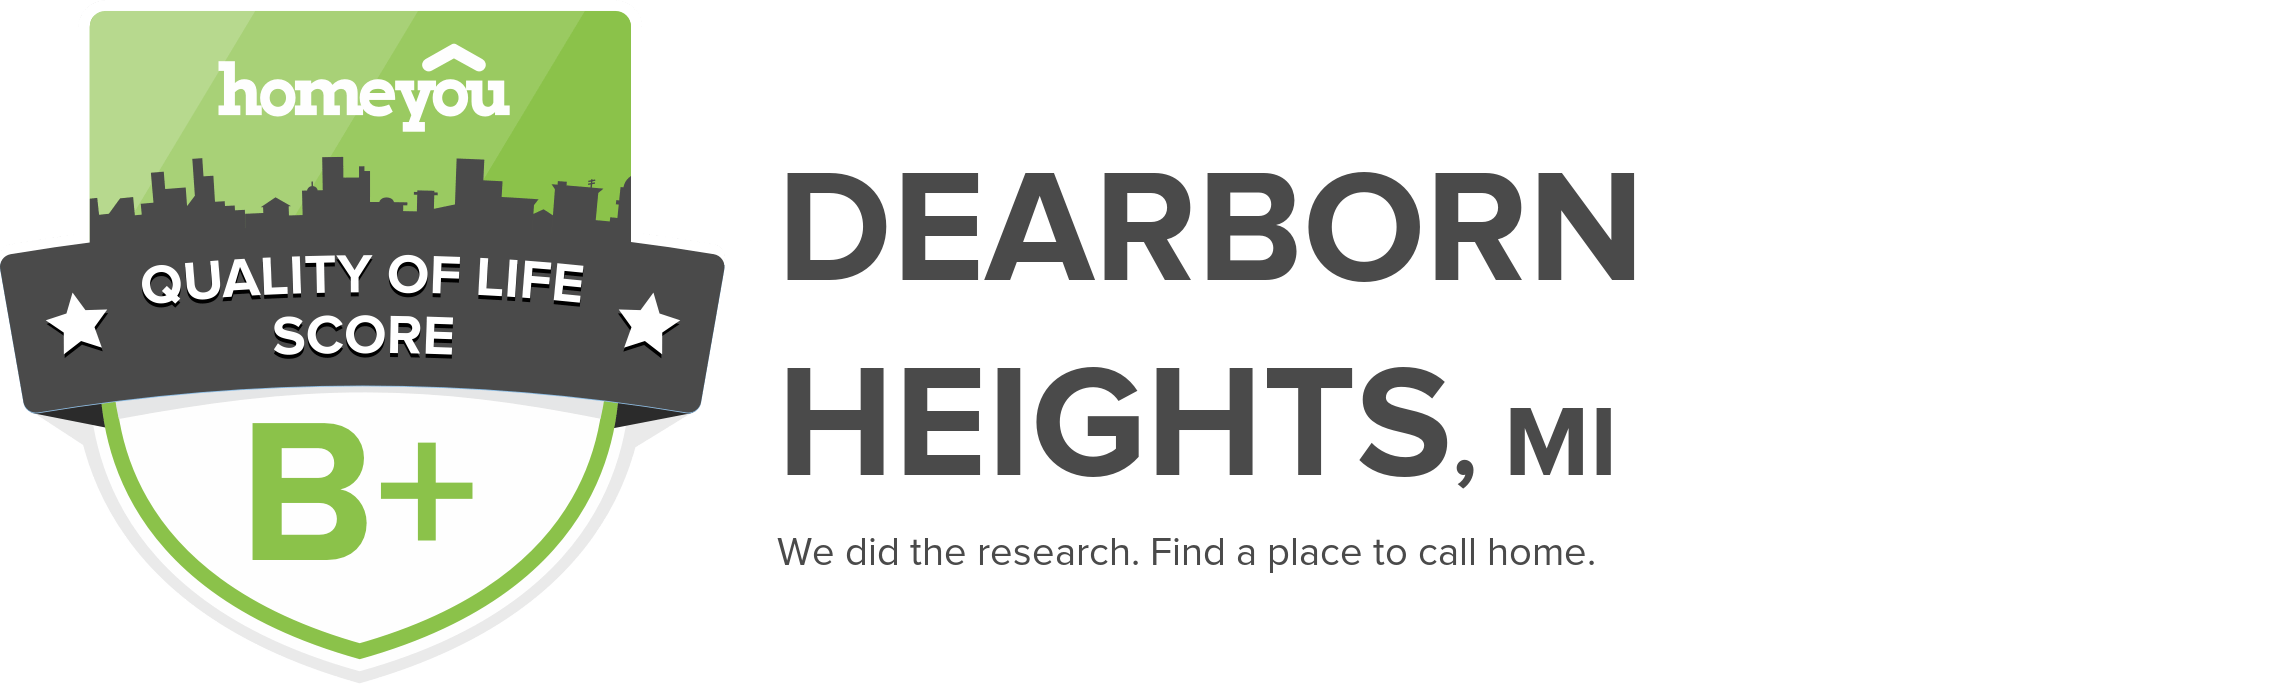 Dearborn Heights, MI